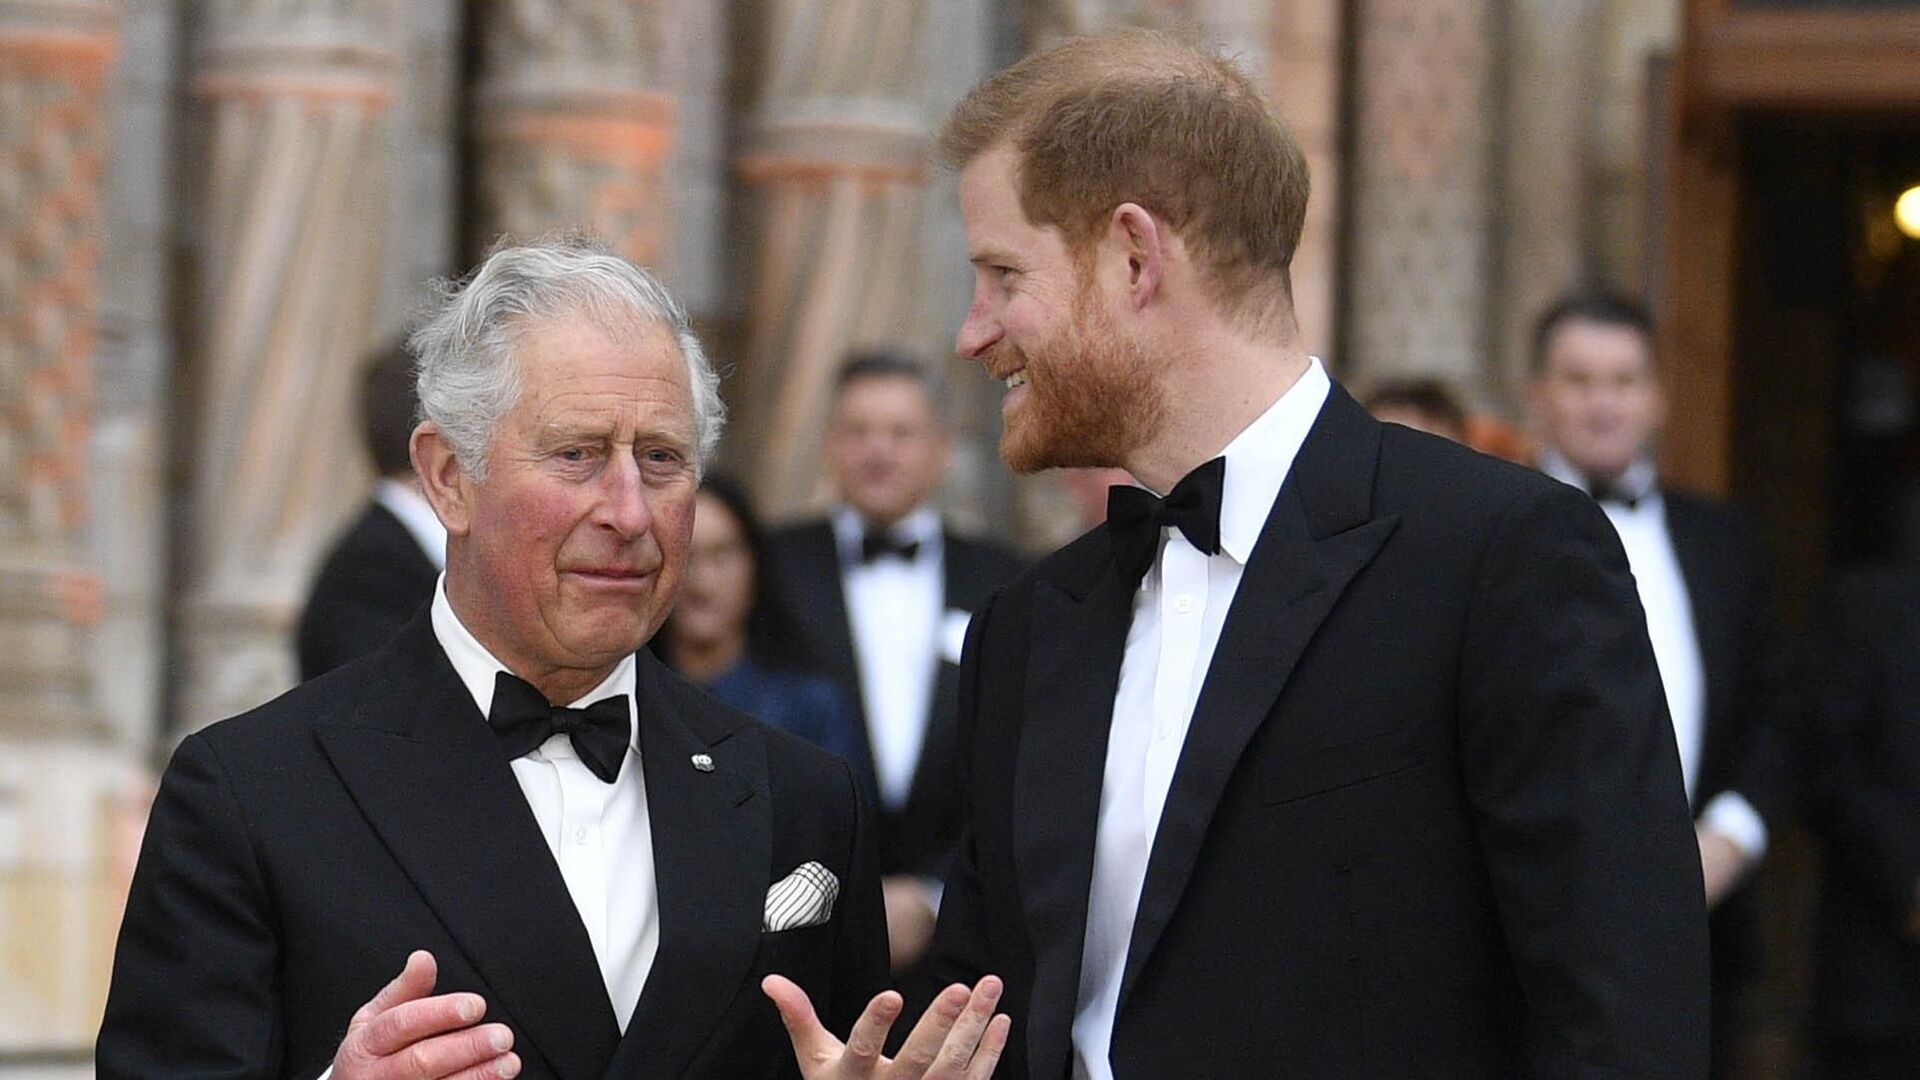 Kral Charles'a kanser teşhisi kondu: Prens Harry apar topar İngiltere'ye gidiyor 4